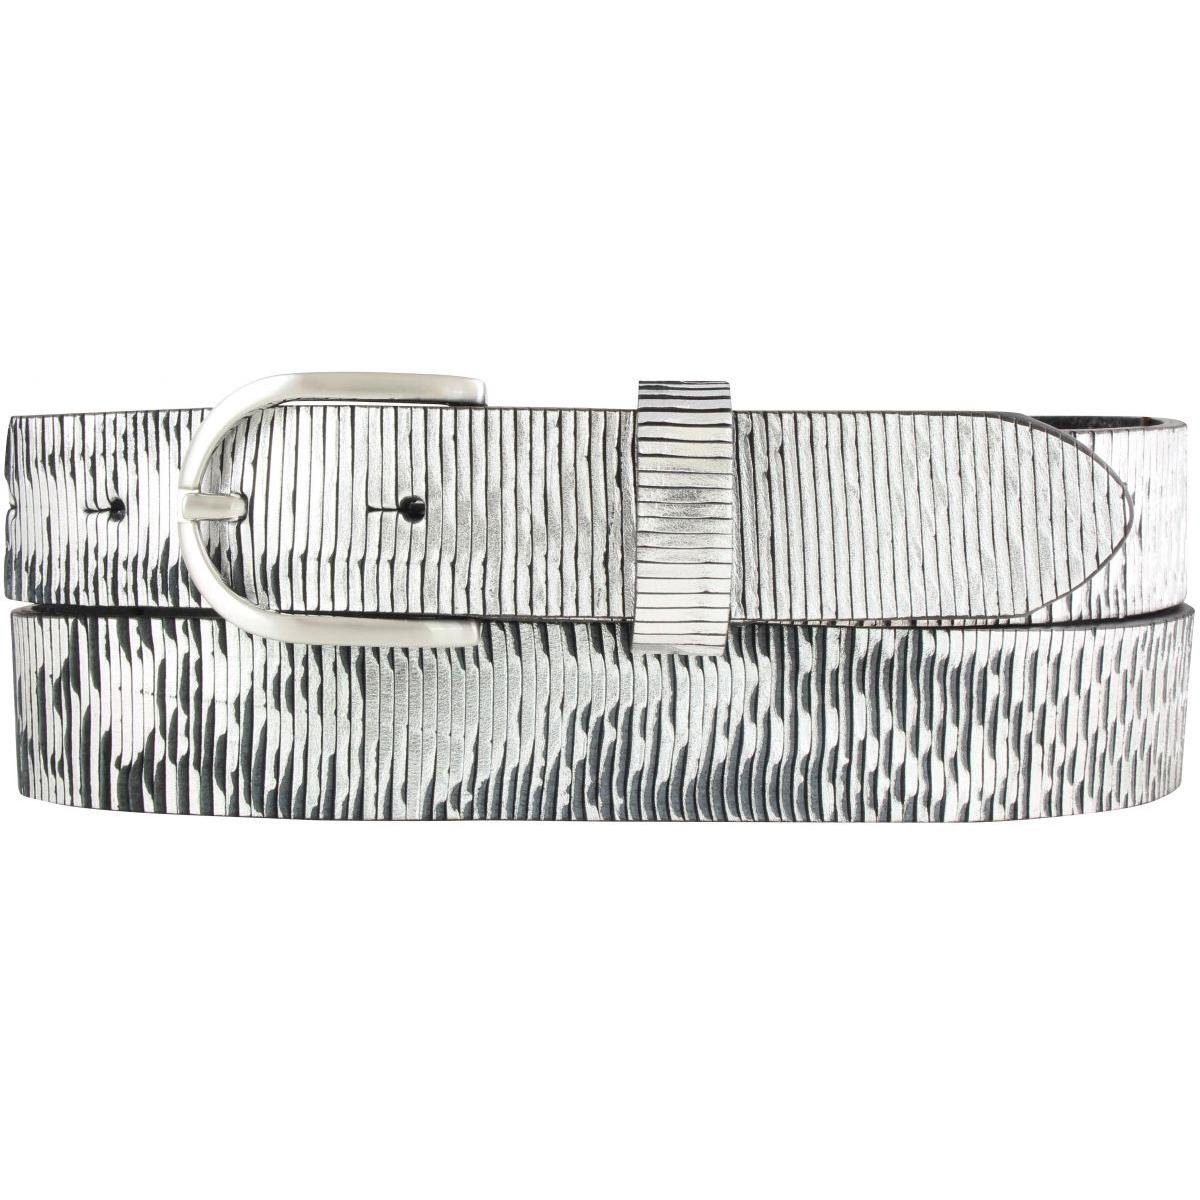 BELTINGER Ledergürtel Damengürtel Metall-Optik aus Vollrindleder 3 cm - Damen-Gürtel Metalli Schwarz Metallik, Silber